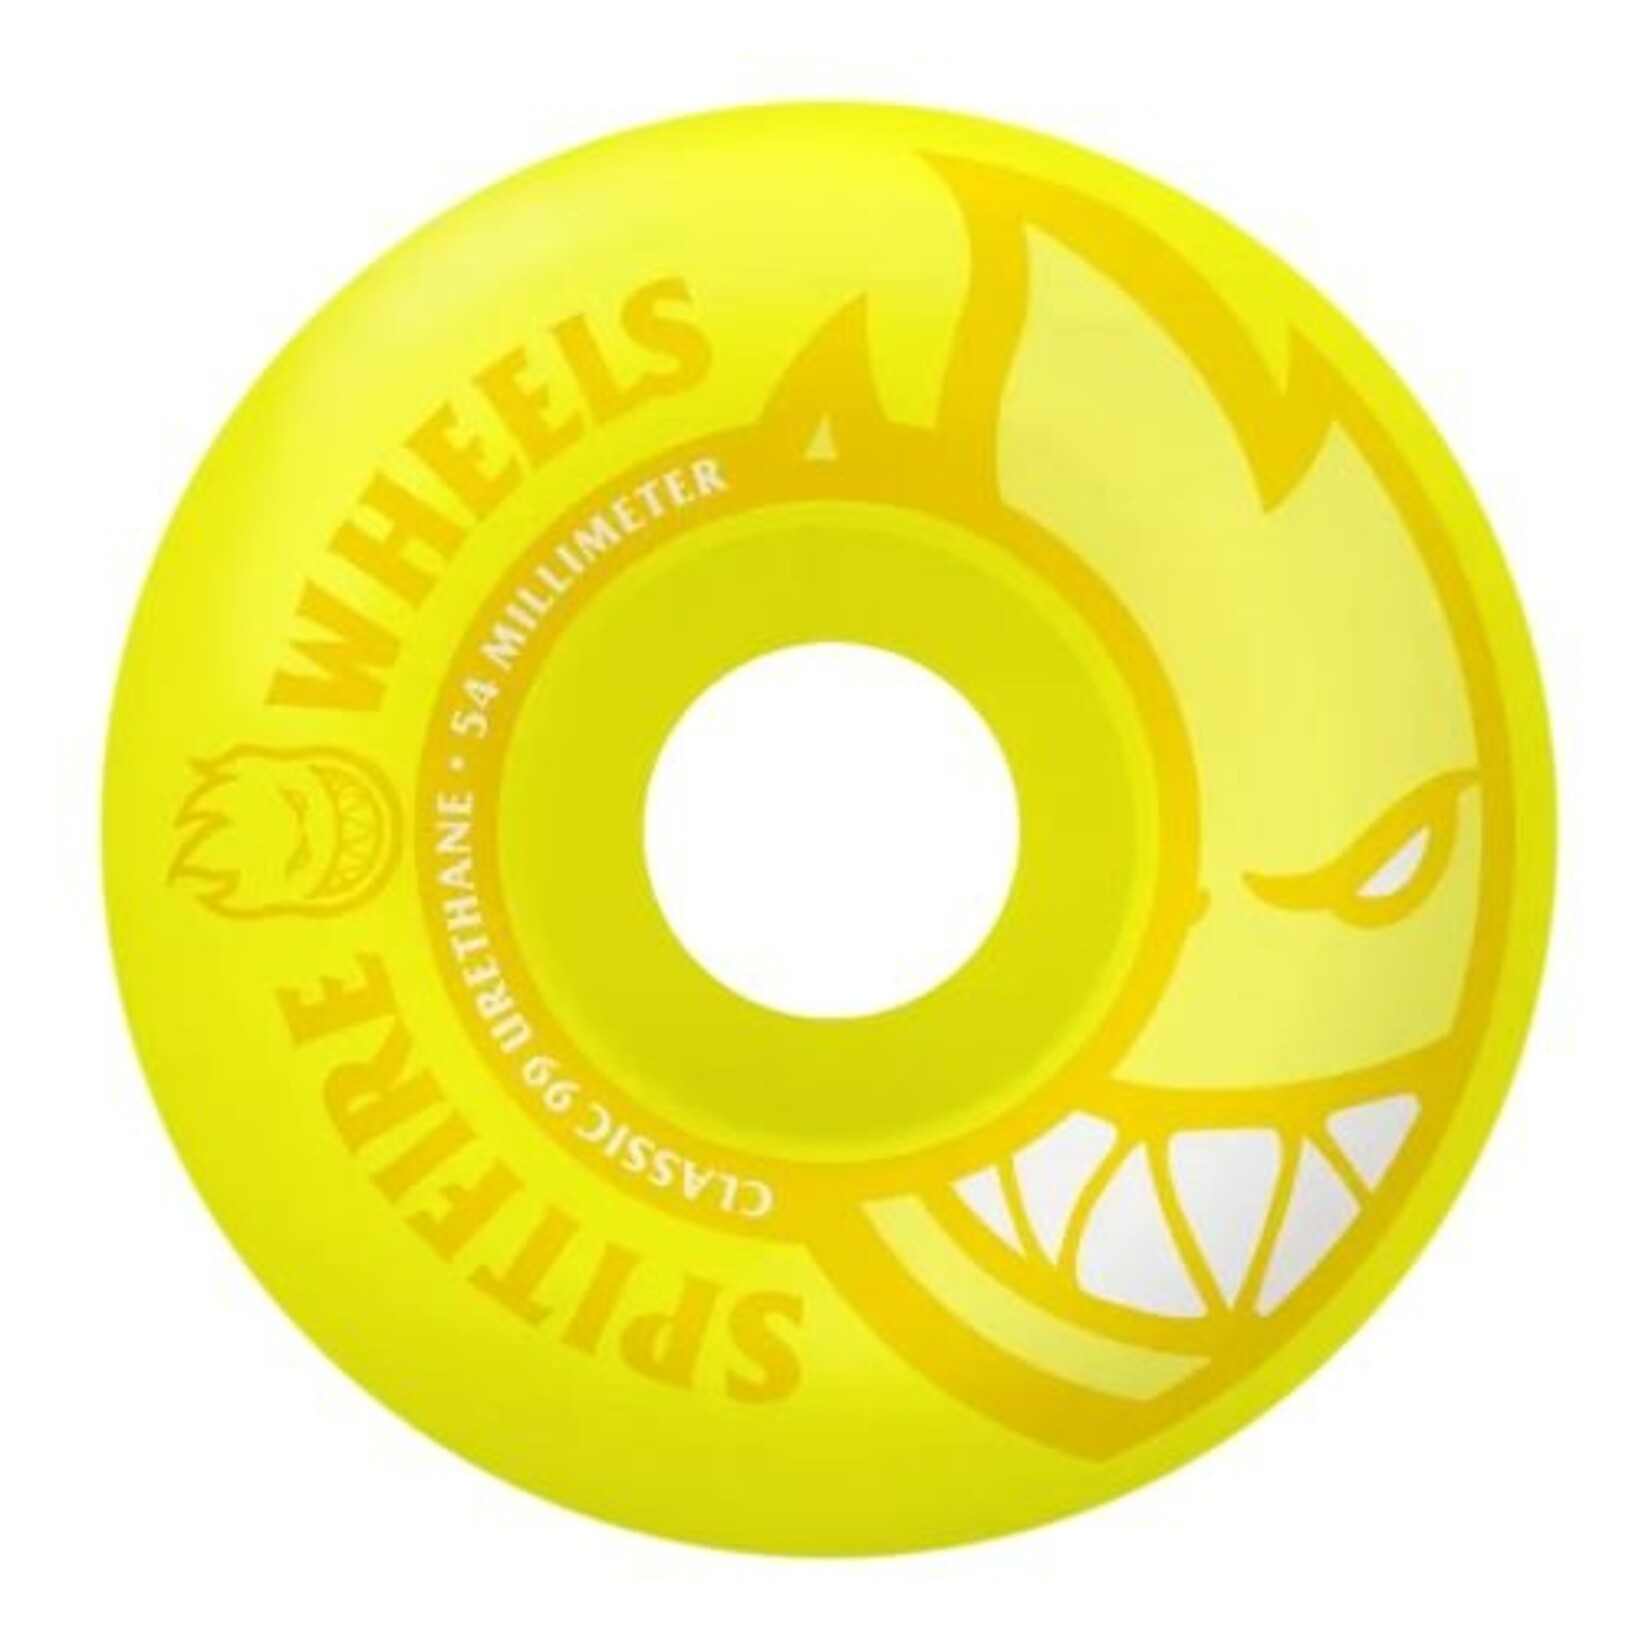 Spitfire Wheels-SF-99-Neon Bighead Yellow-54mm